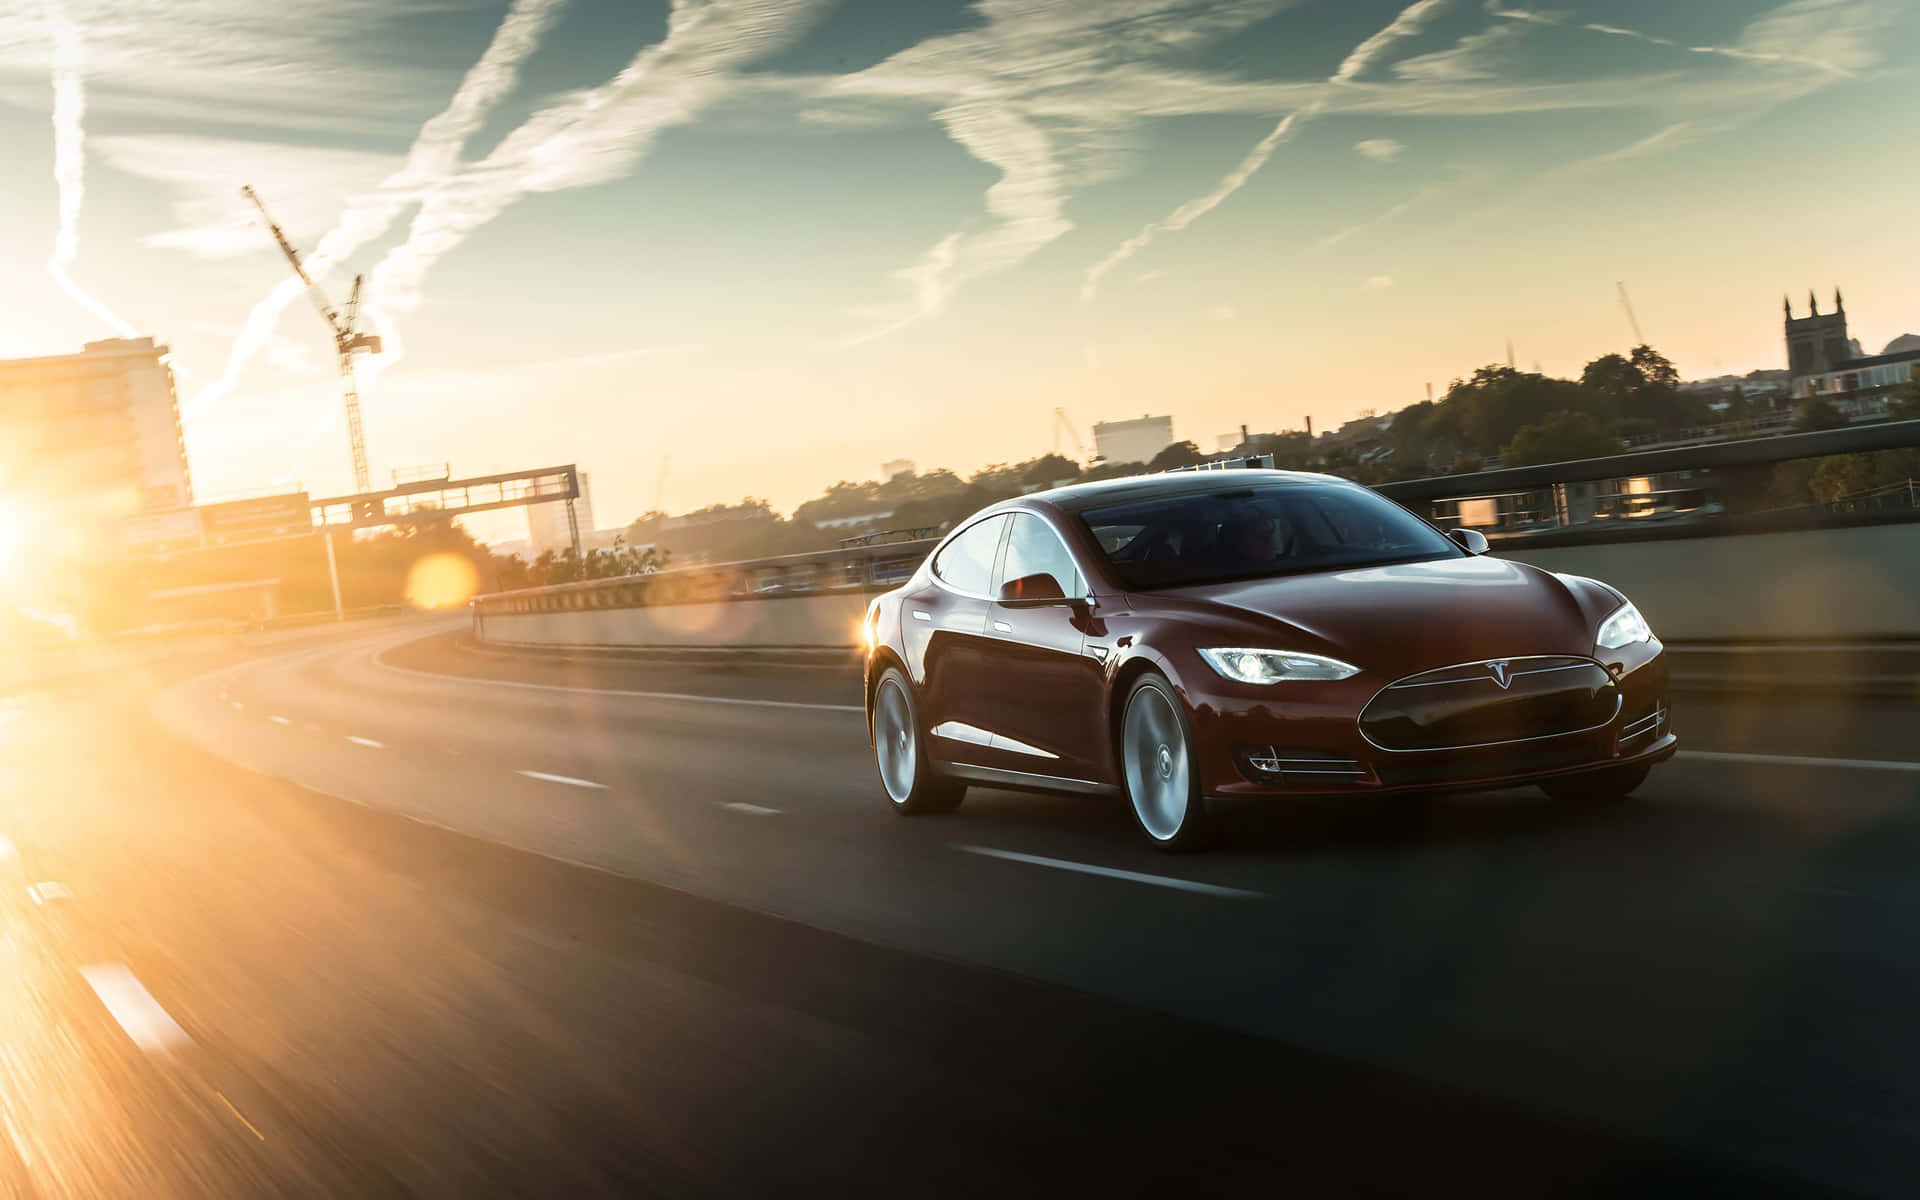 Sleek Tesla Model S Gliding on the Highway